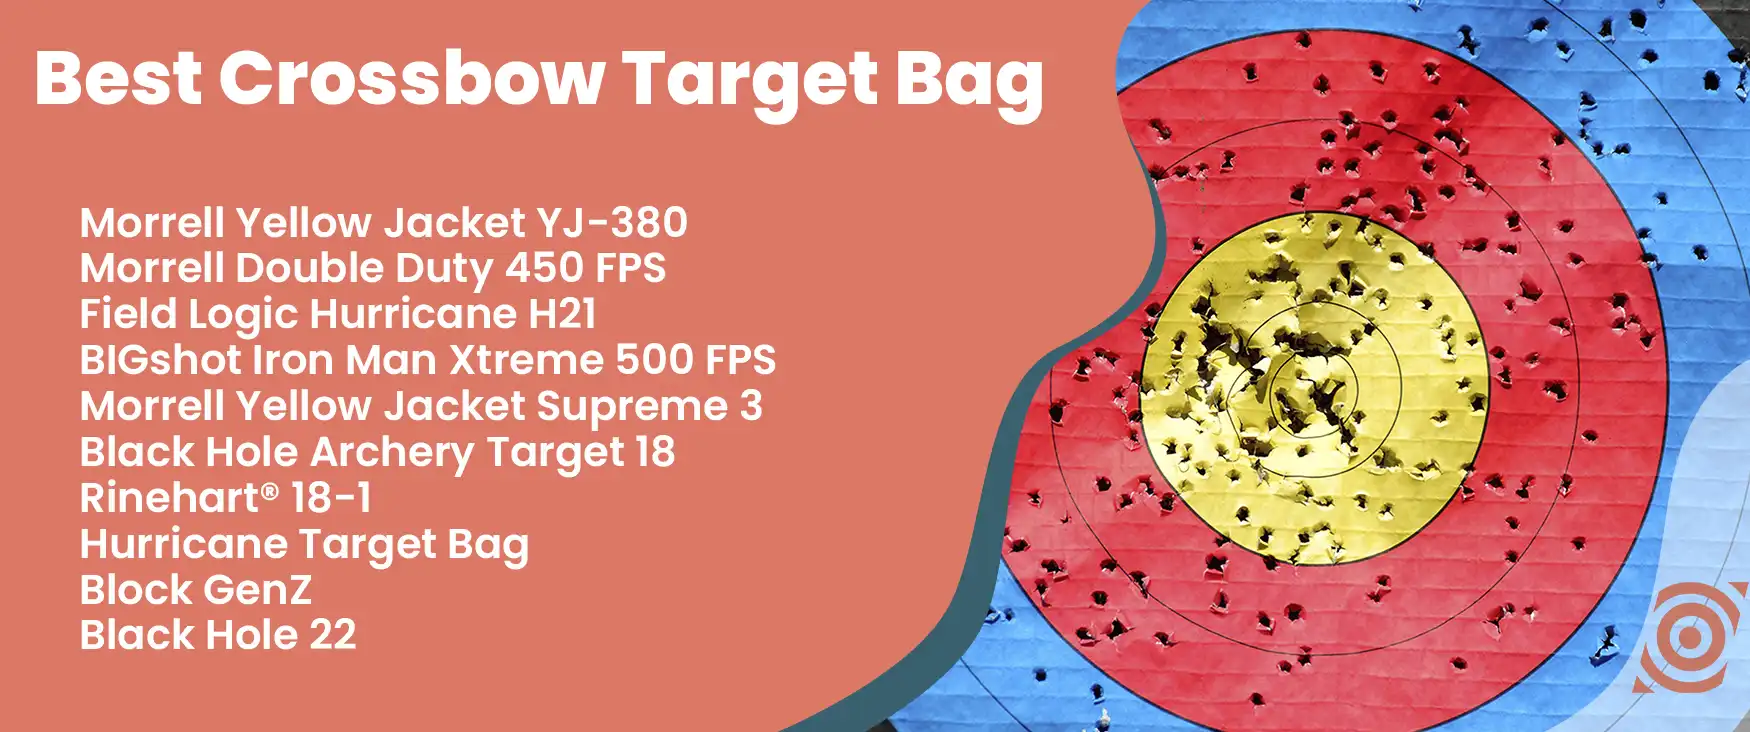 Best Crossbow Target Bag